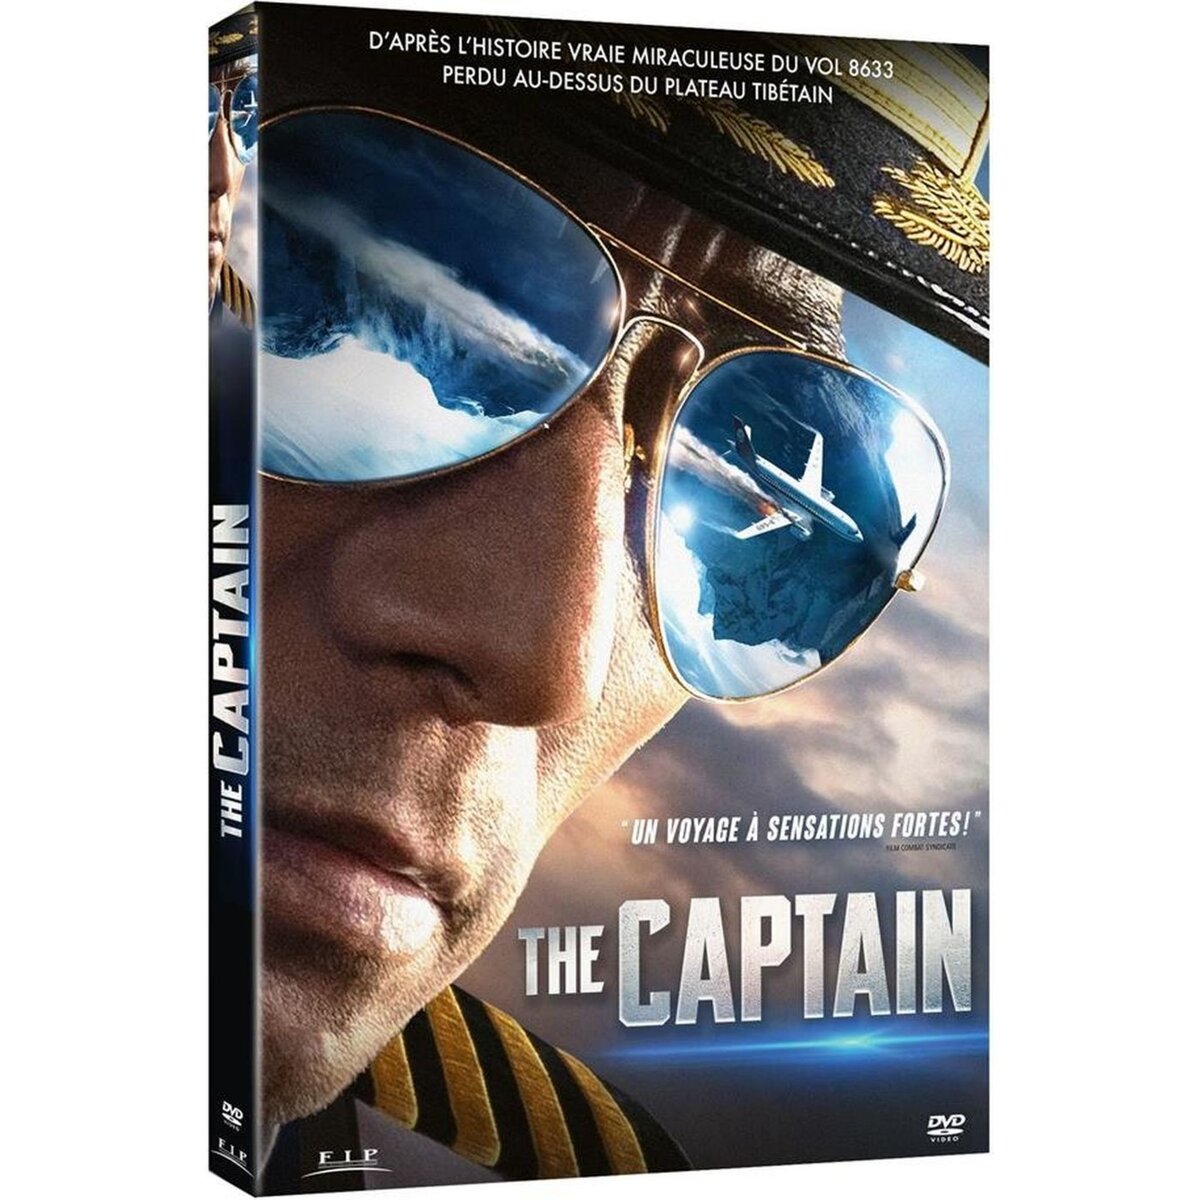 The Captain DVD